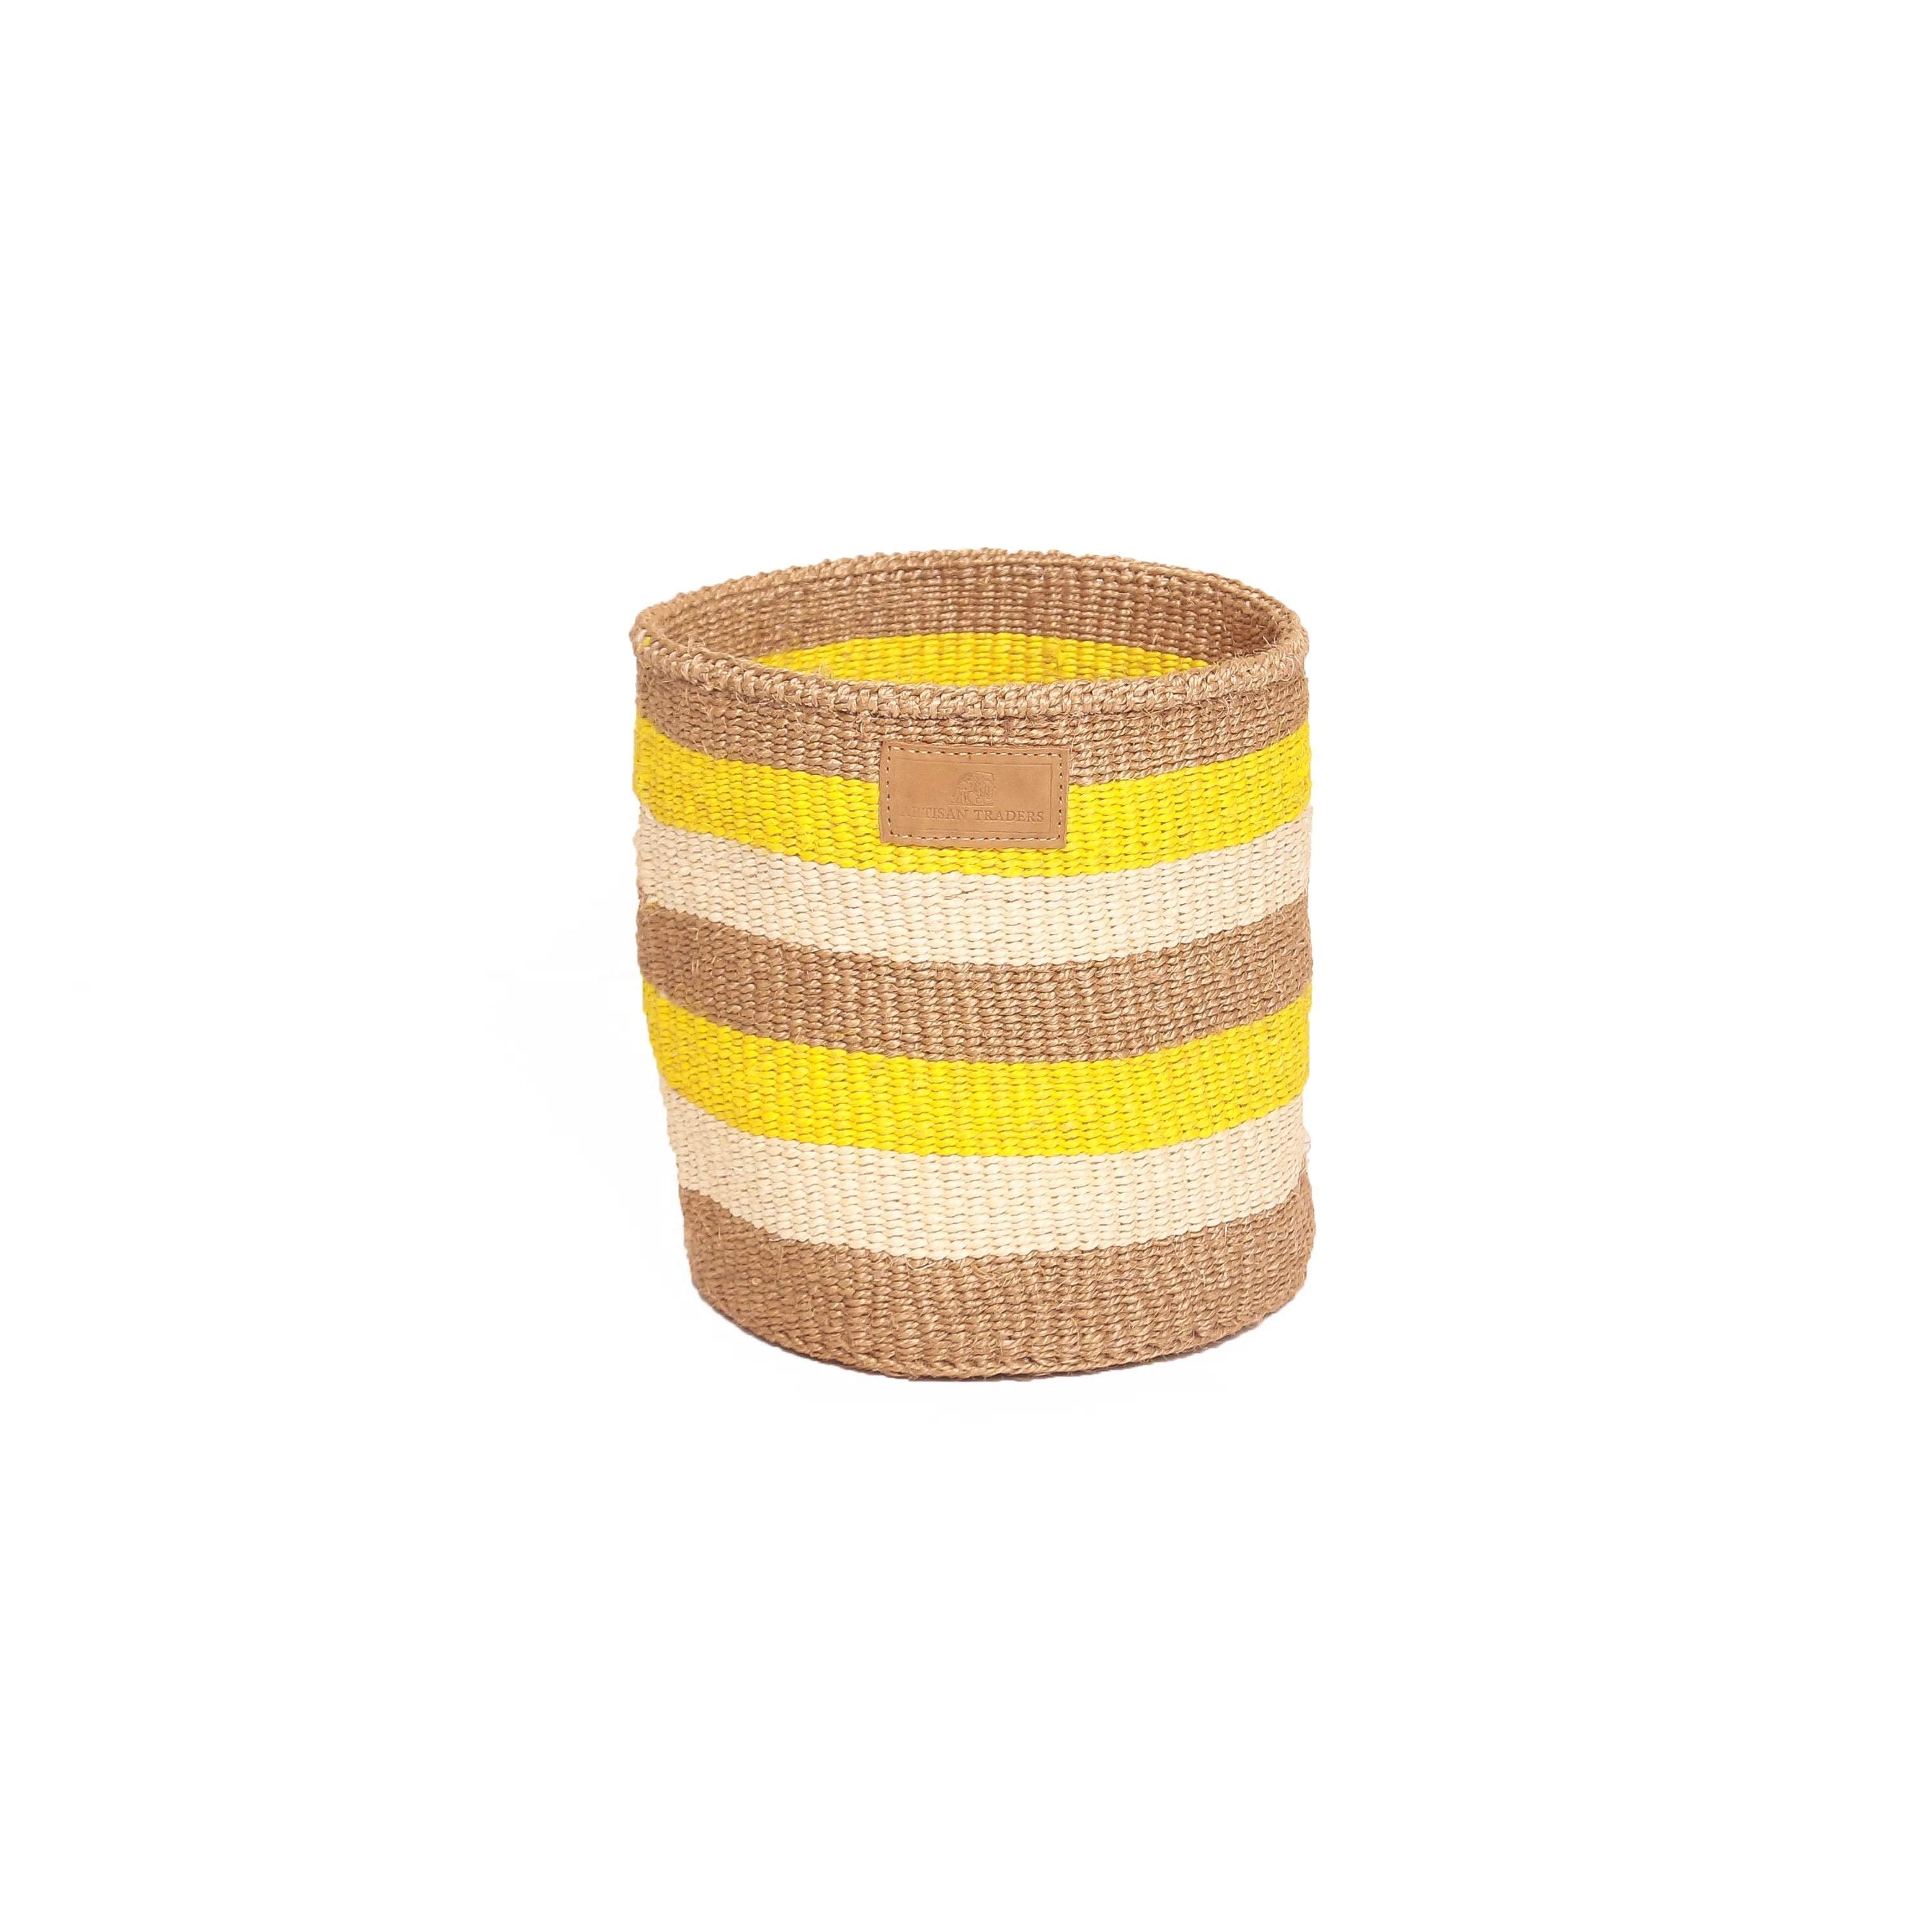 Kiondoo basket Yellow Stripes-Artisan Traders-african,african basket,basket,handcrafted,handmade,kenya,kiondo,kiondoo,natural,sisal